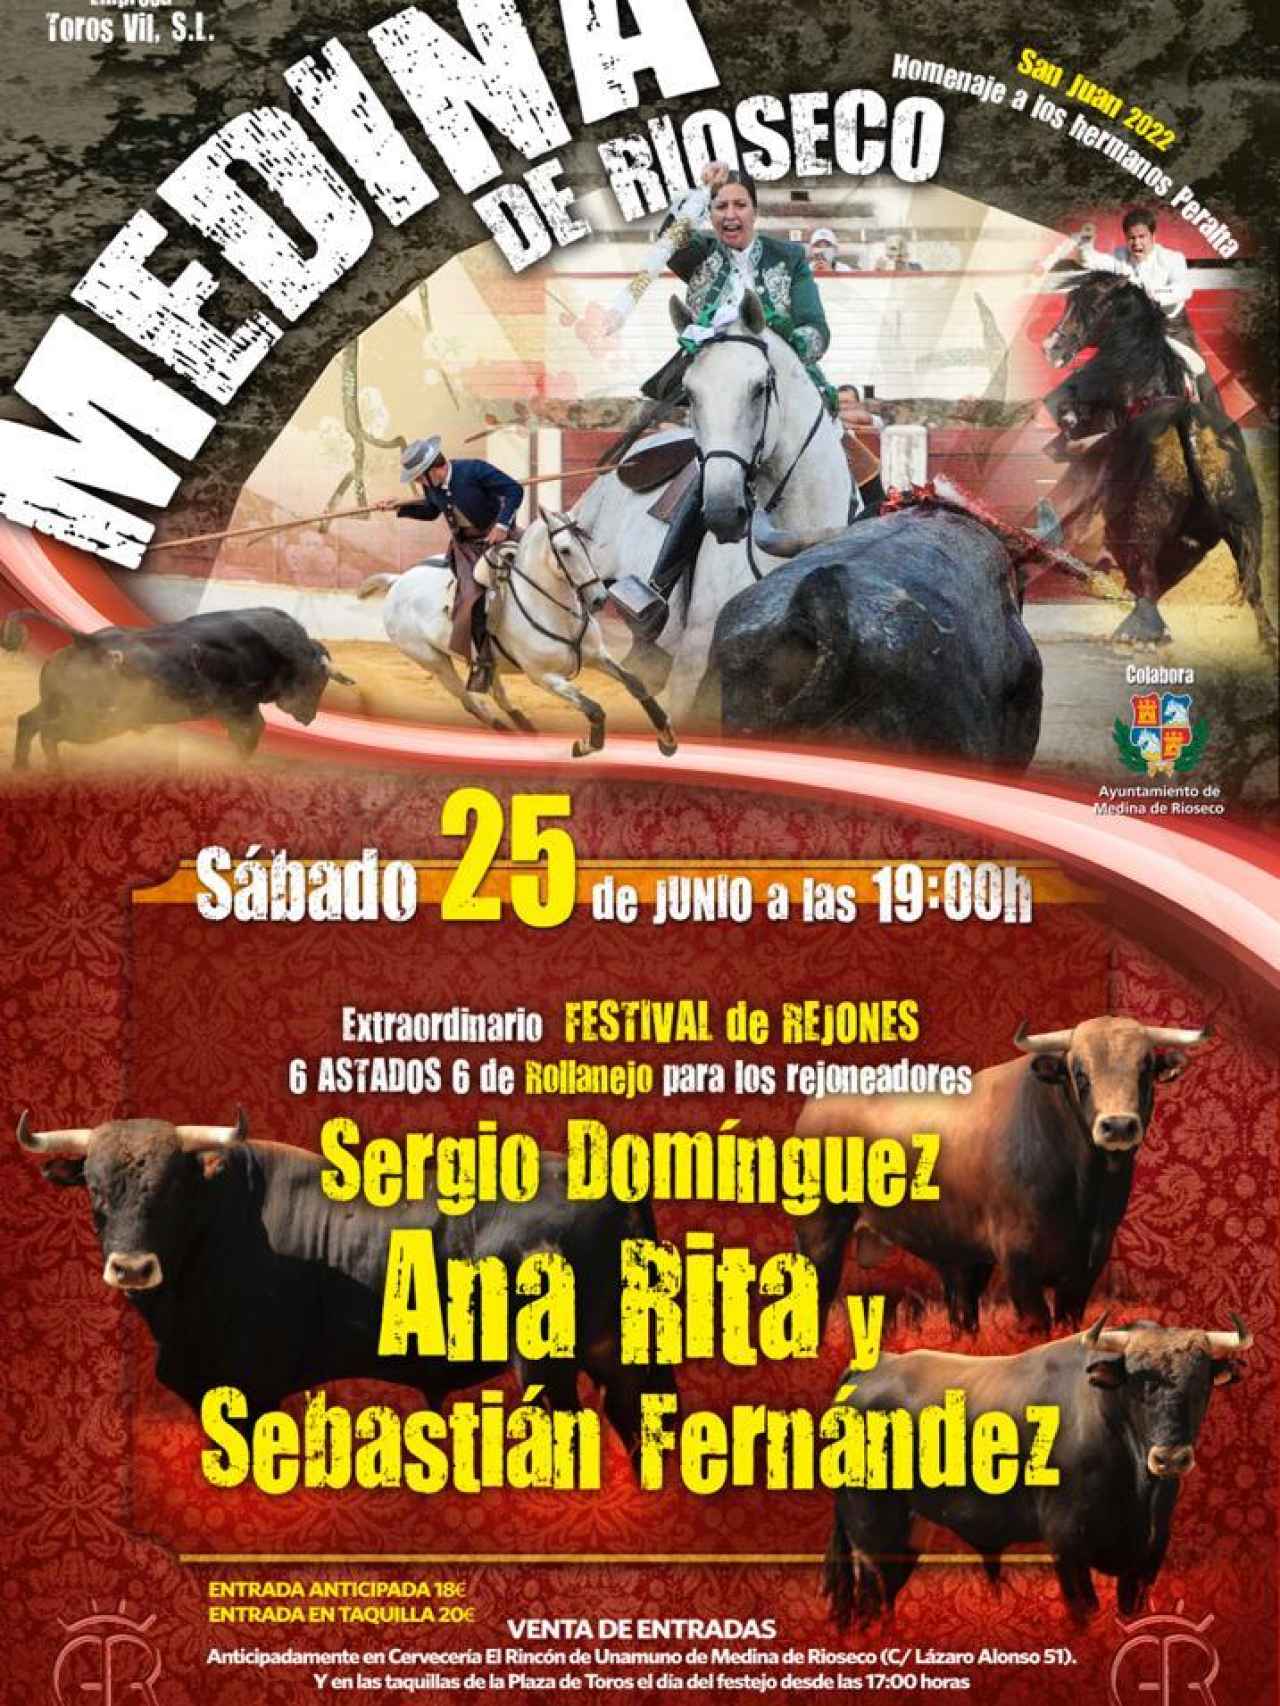 Cartel de la corrida de rejones en Medina de Rioseco.